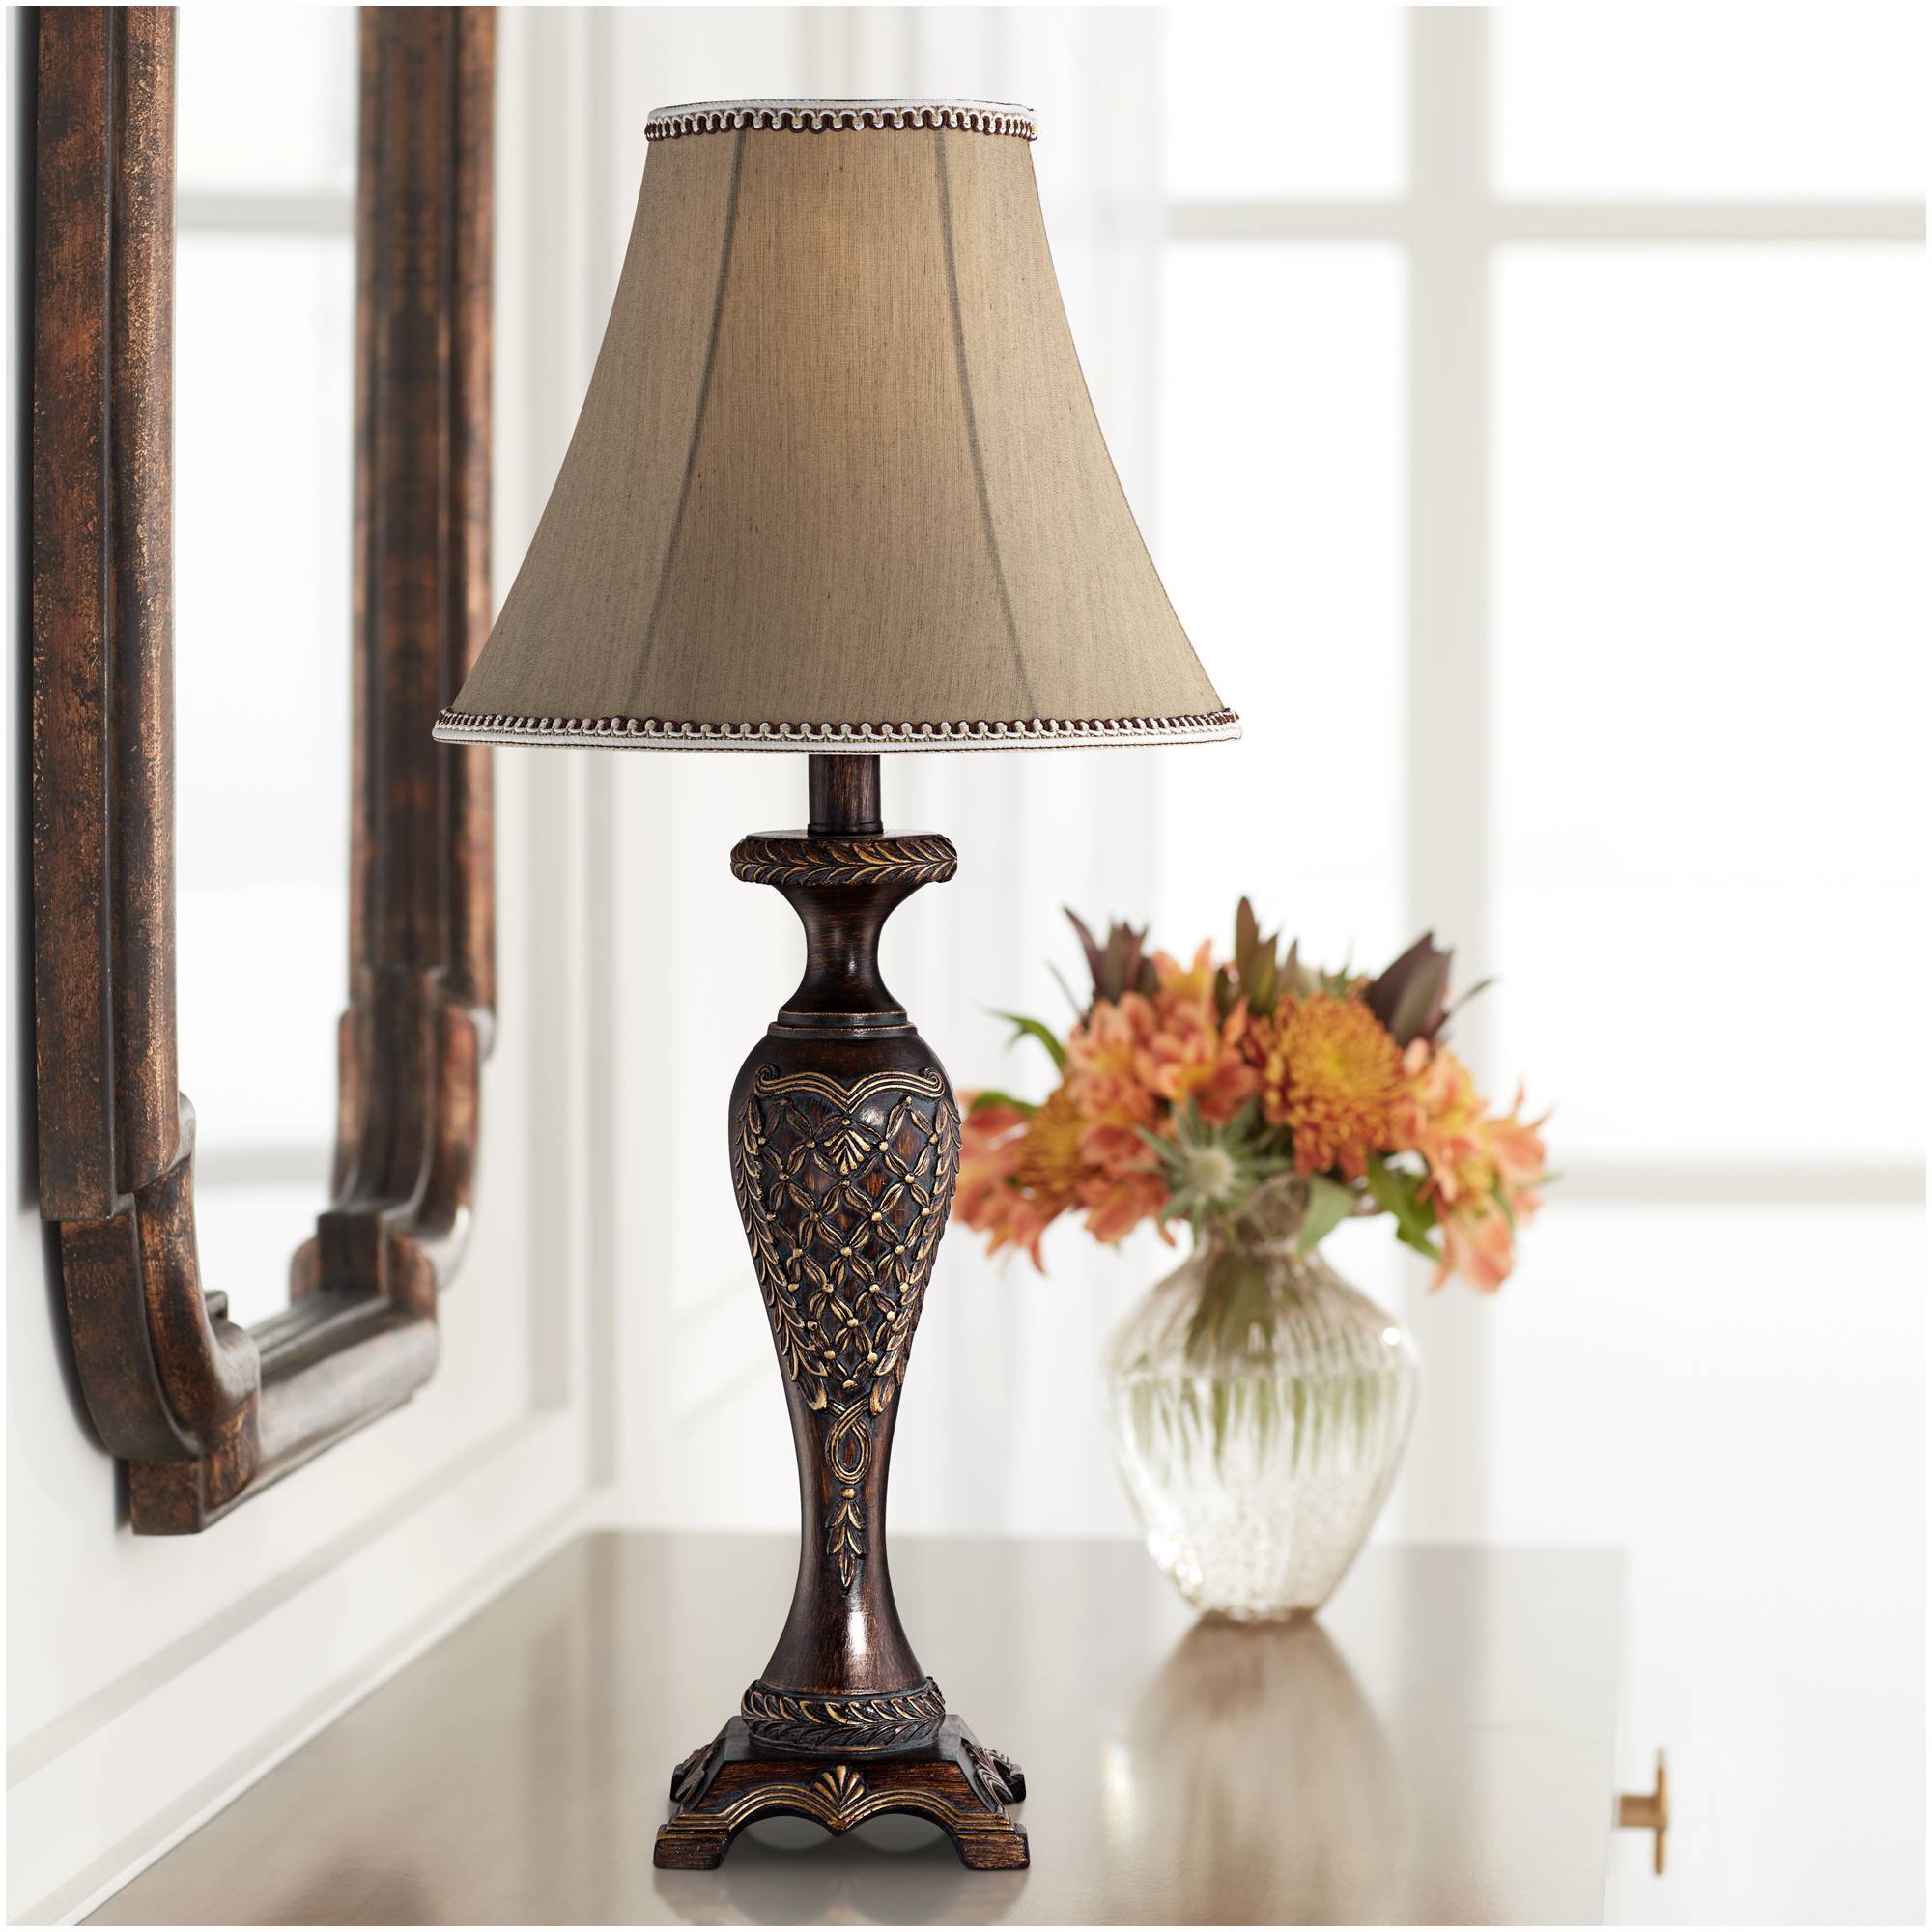 Traditional Table Lamp Dark Bronze Floral Detail For Living Room Bedroom EBay